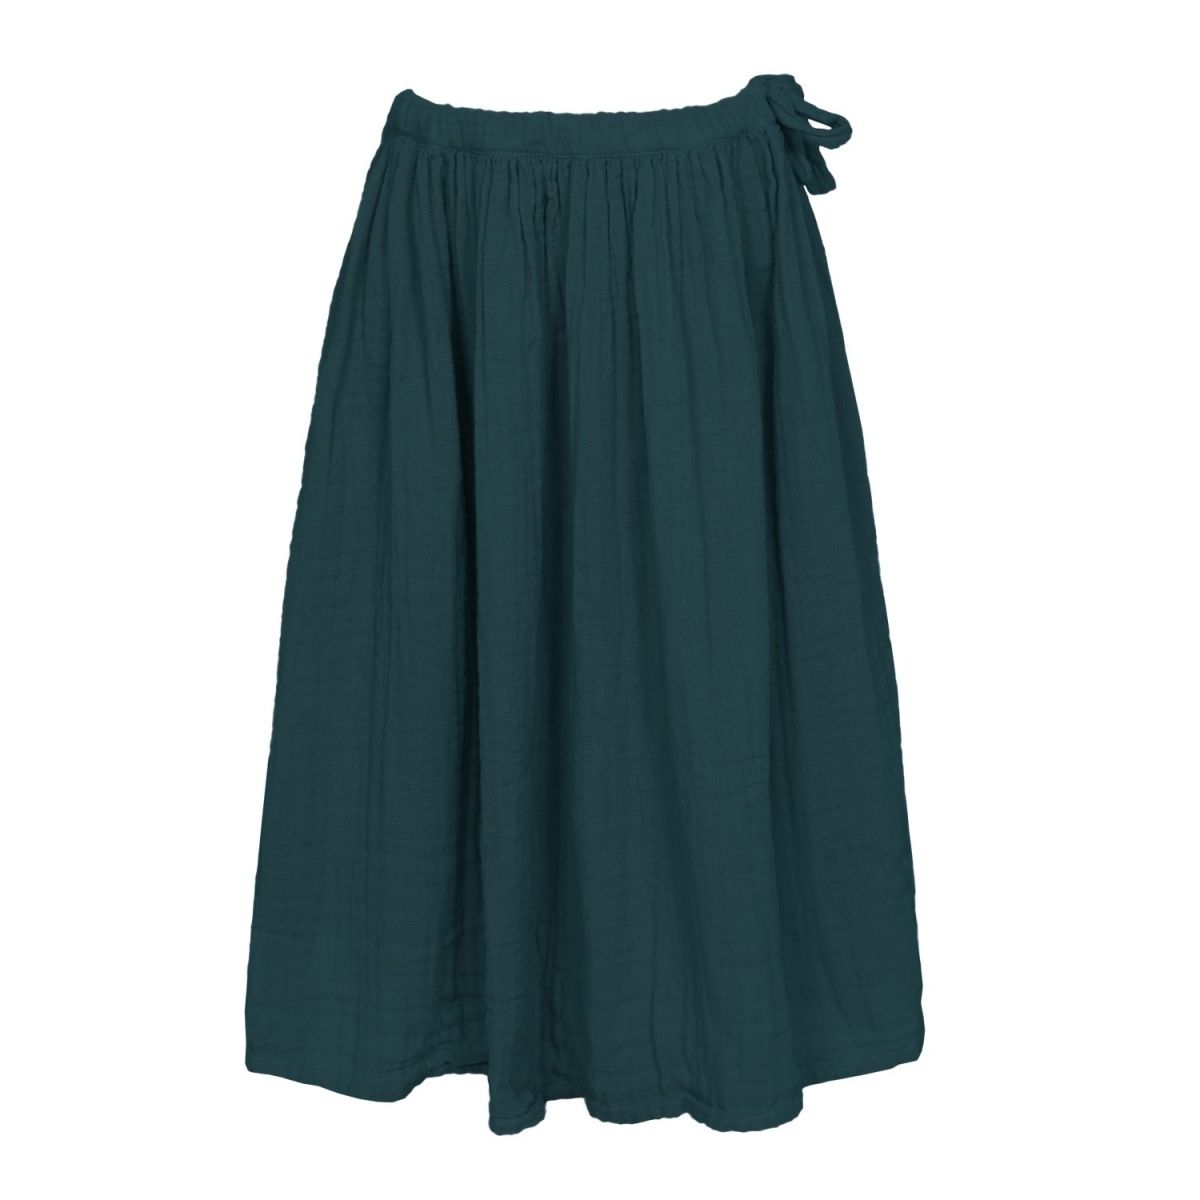 Numero 74 - Skirt for girls Ava long teal blue - Faldas y